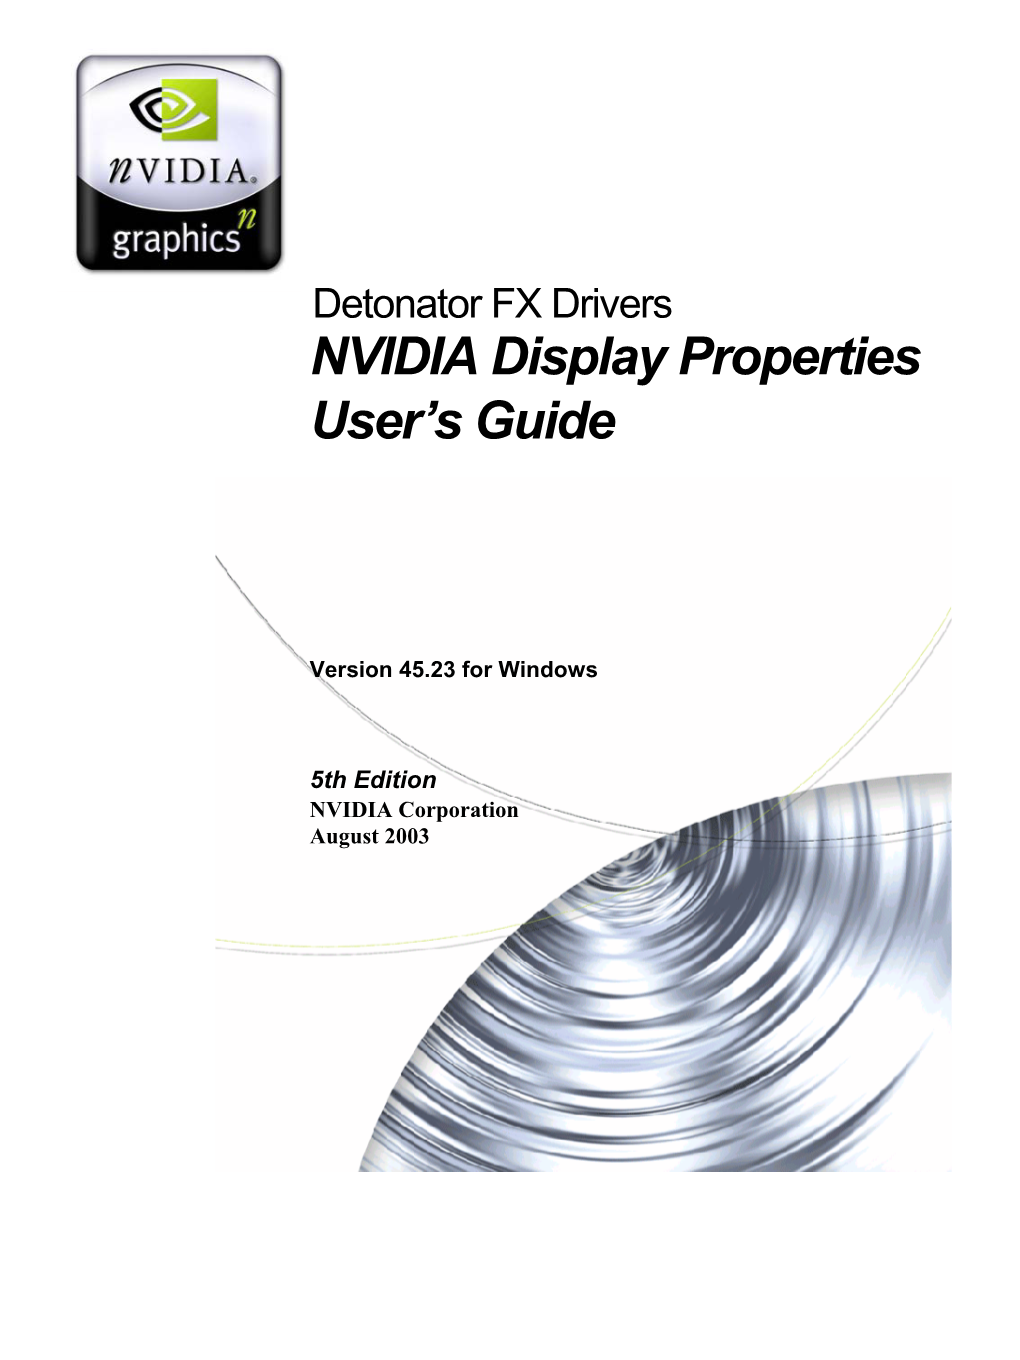 NVIDIA Display Properties User's Guide